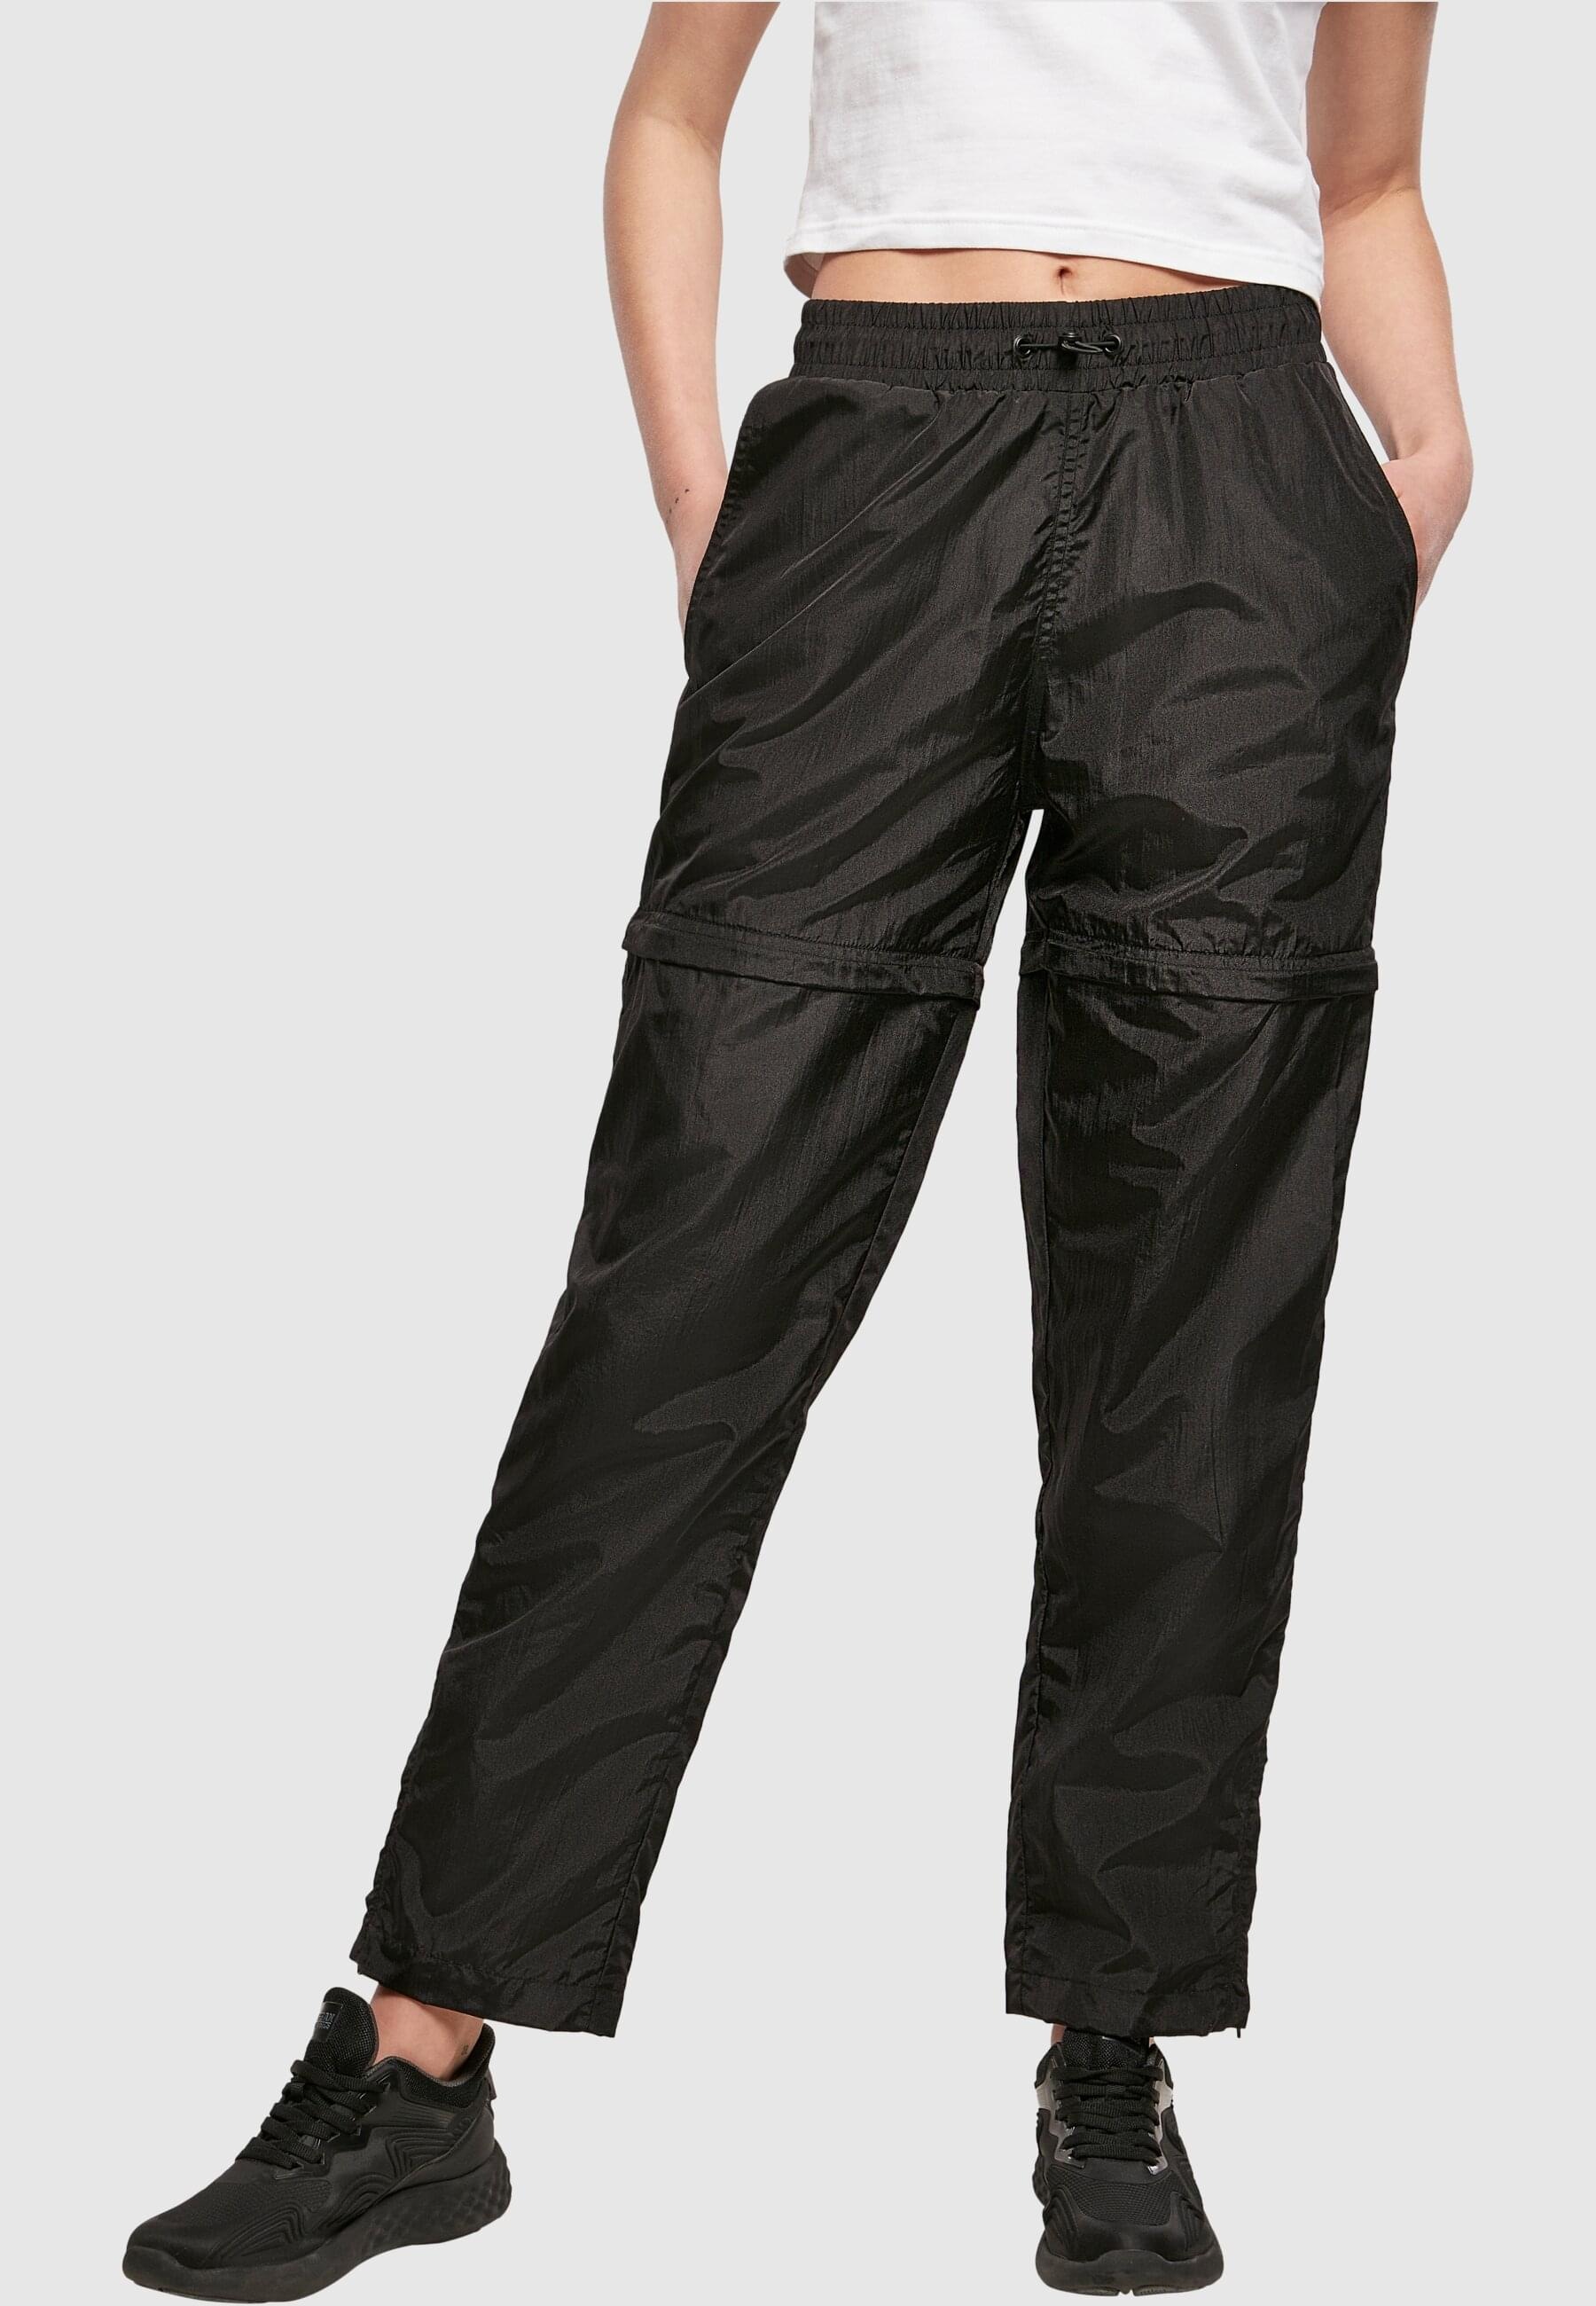 URBAN CLASSICS Jerseyhose »Damen Ladies bestellen Zip tlg.) (1 Shiny Nylon Pants«, Crinkle